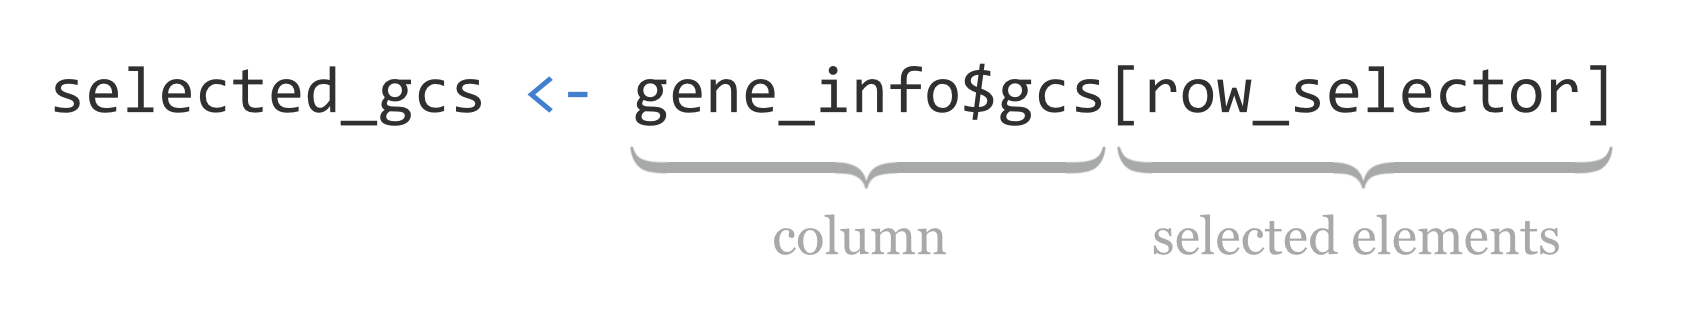 III.6_14_subframe_column_2